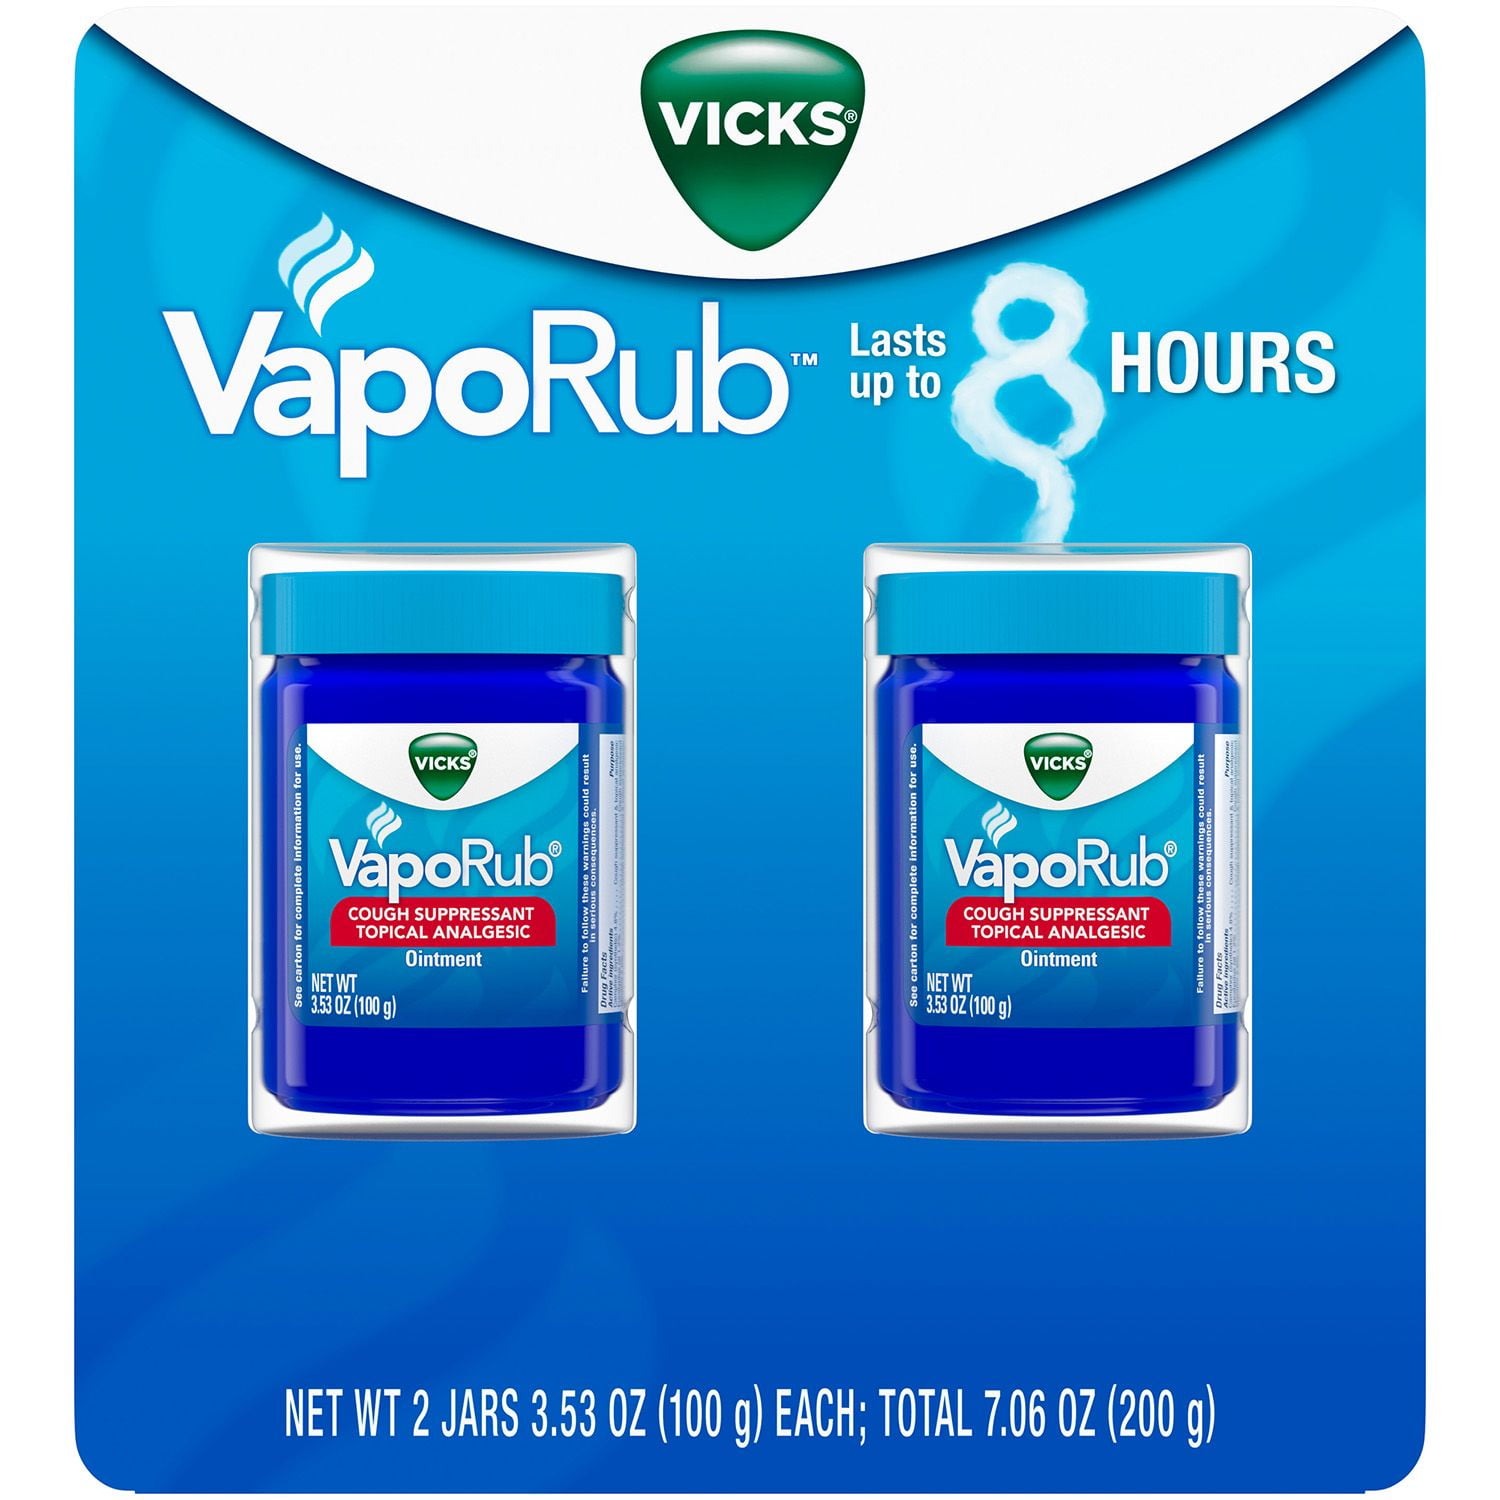 Vicks VapoRub Cough Suppressant Topical Analgesic Ointment Twin Pack (7.06 oz.)